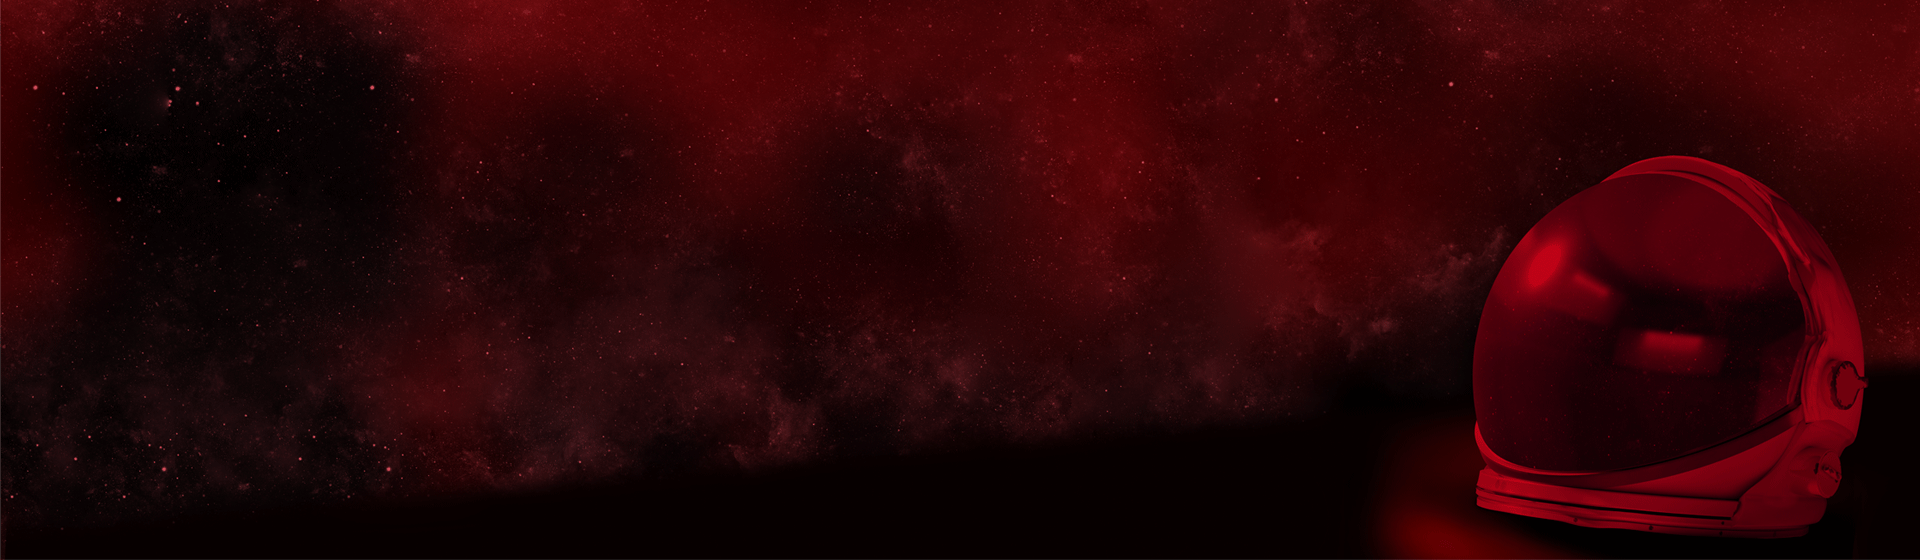 Astronaut helmet amongst red galaxy background